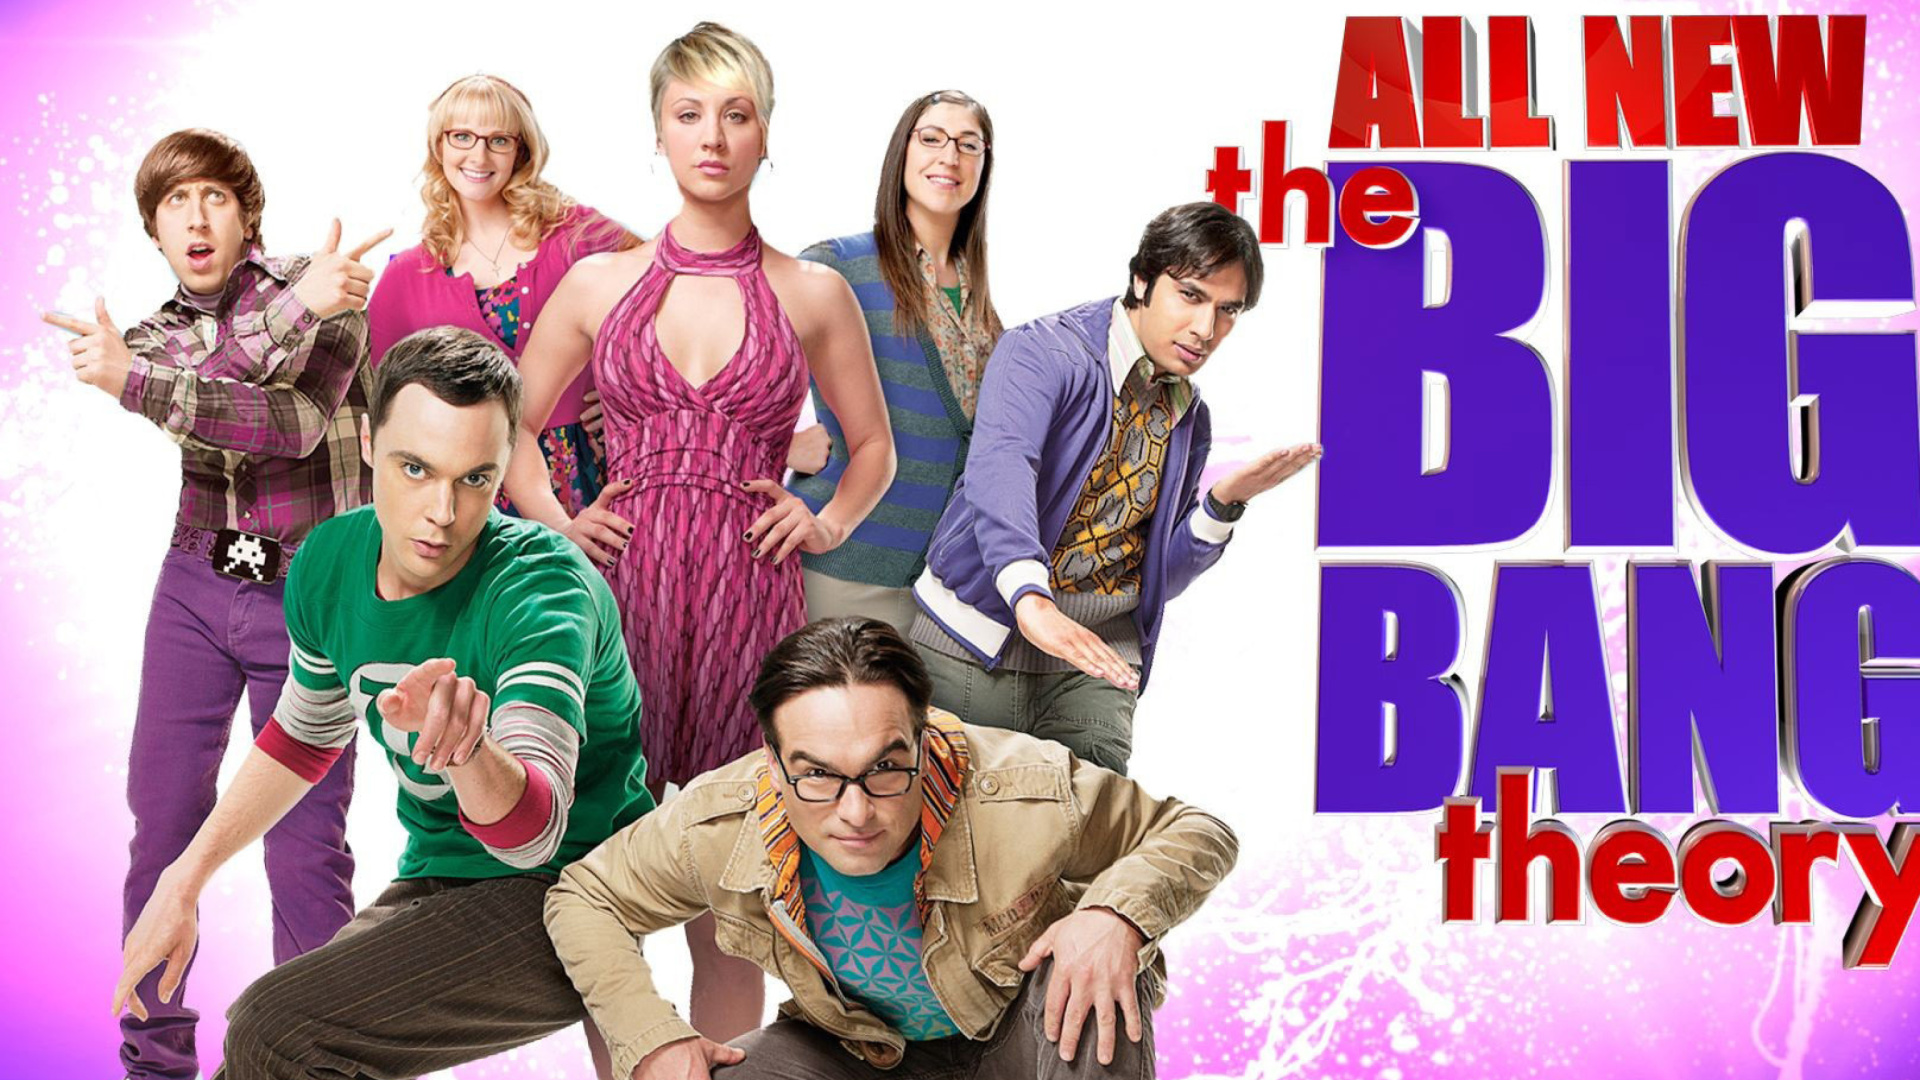 The Big Bang Theory Wallpaper for Desktop 1920x1080 Full HD